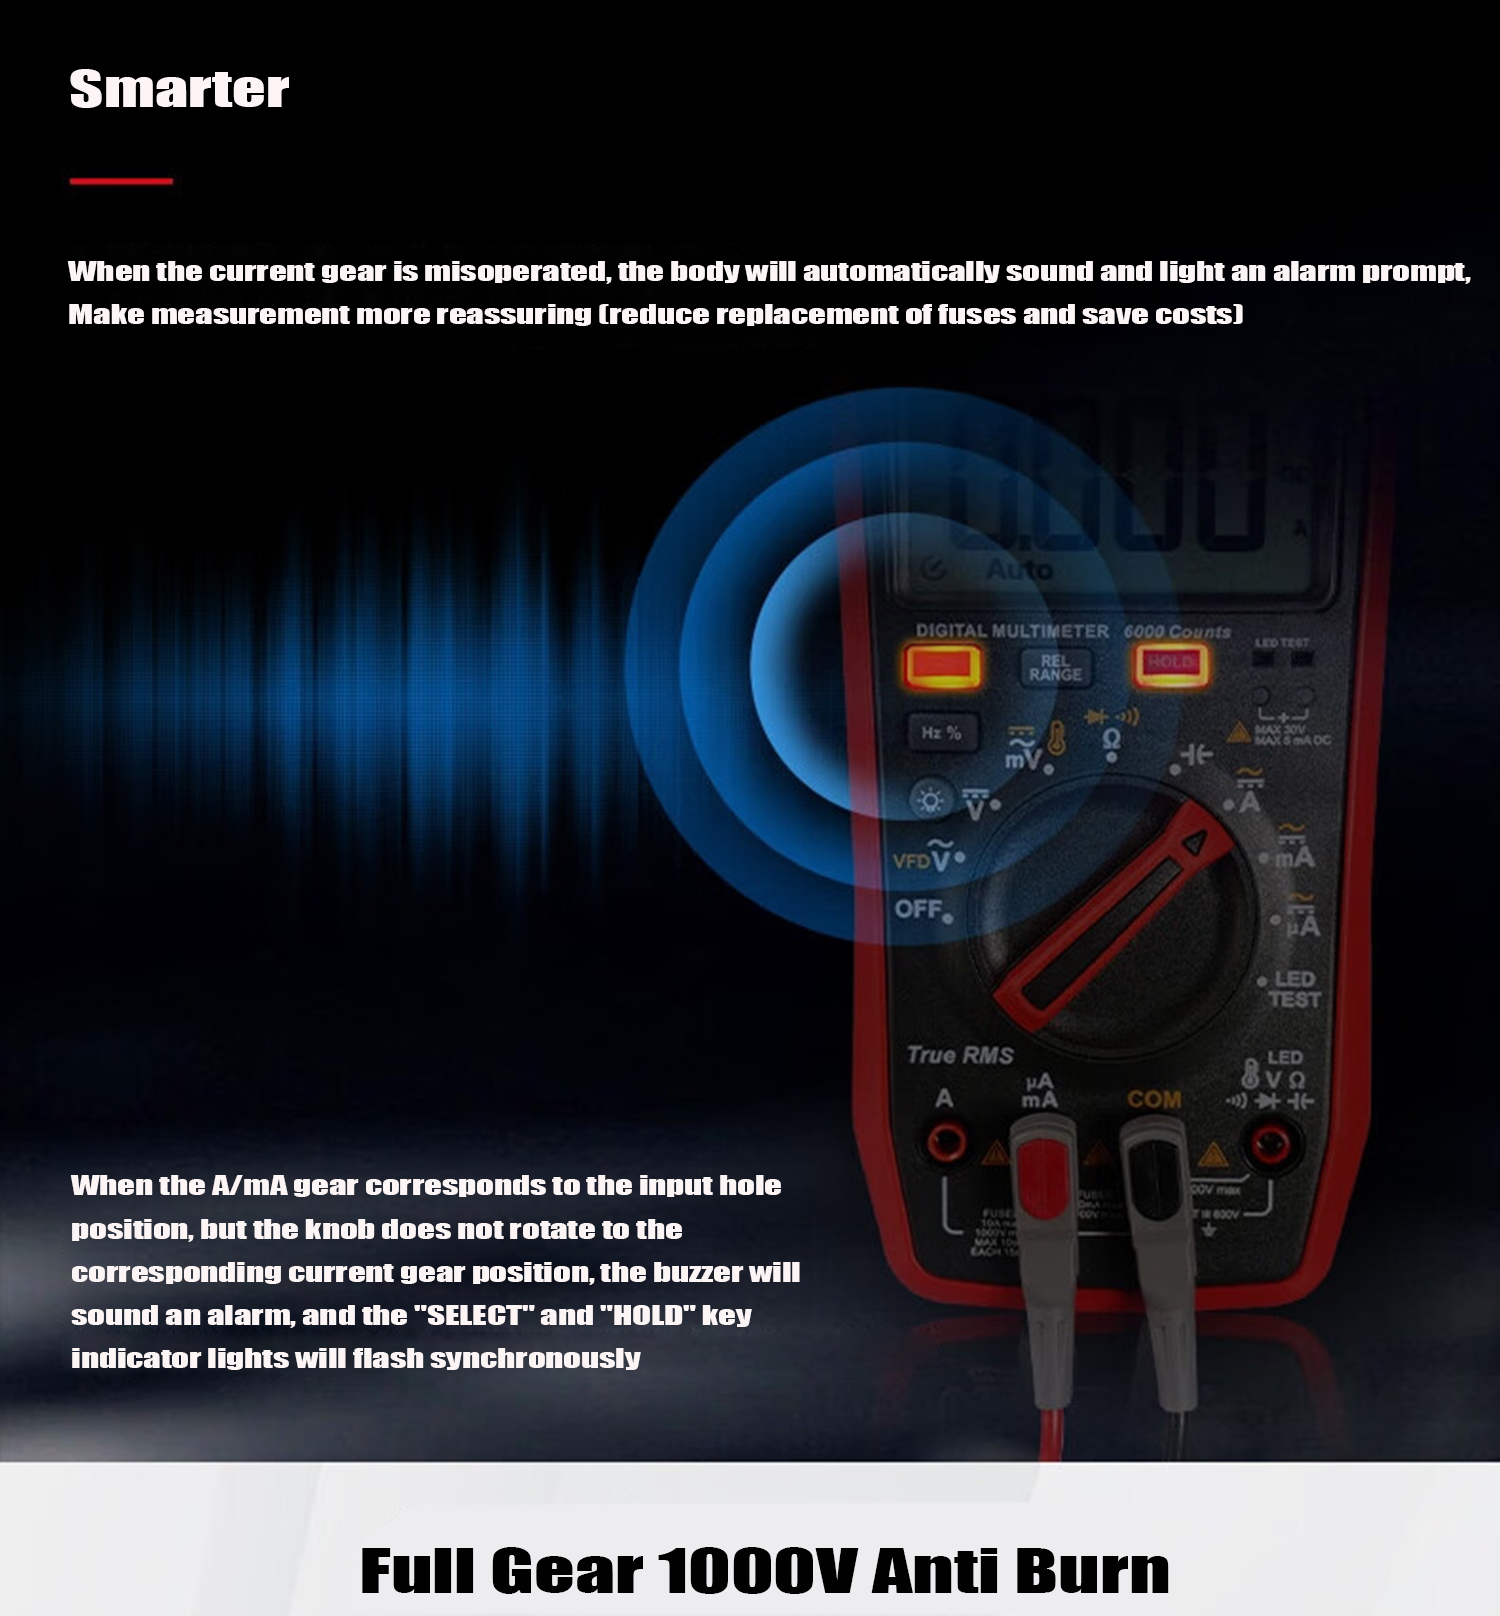 UNI-T UT18B MAX True RMS Digital Multimeters Voltmeter Auto Range Ammeter Frequency Capacitance Tester VFD